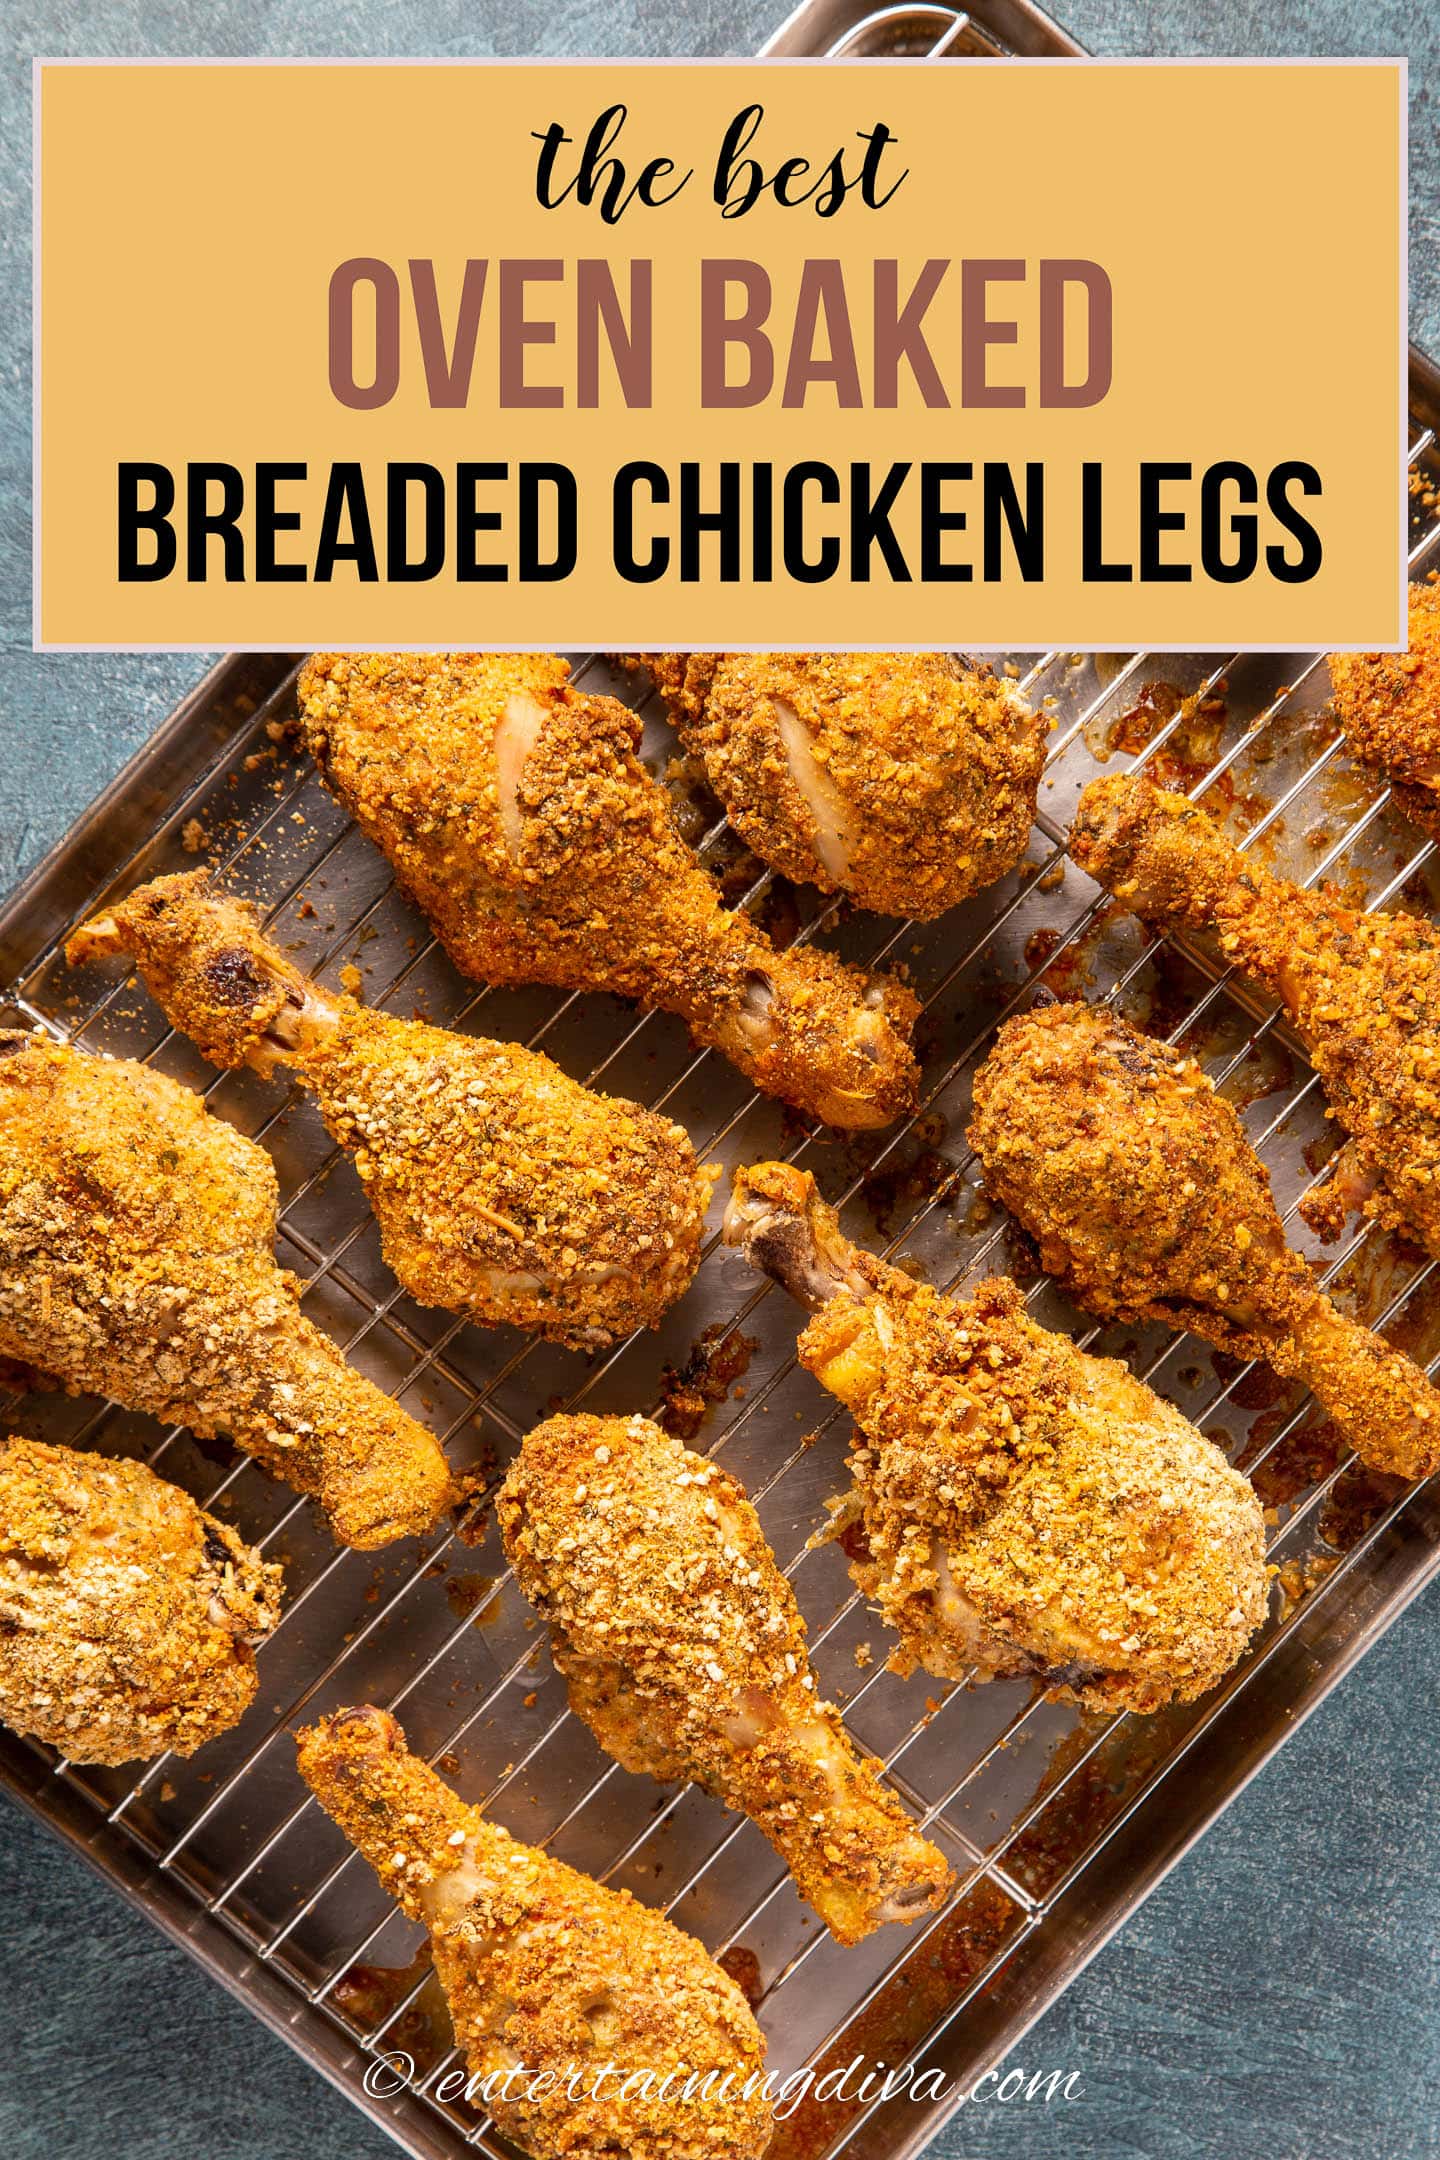 The best oven baked breaded chicken legs